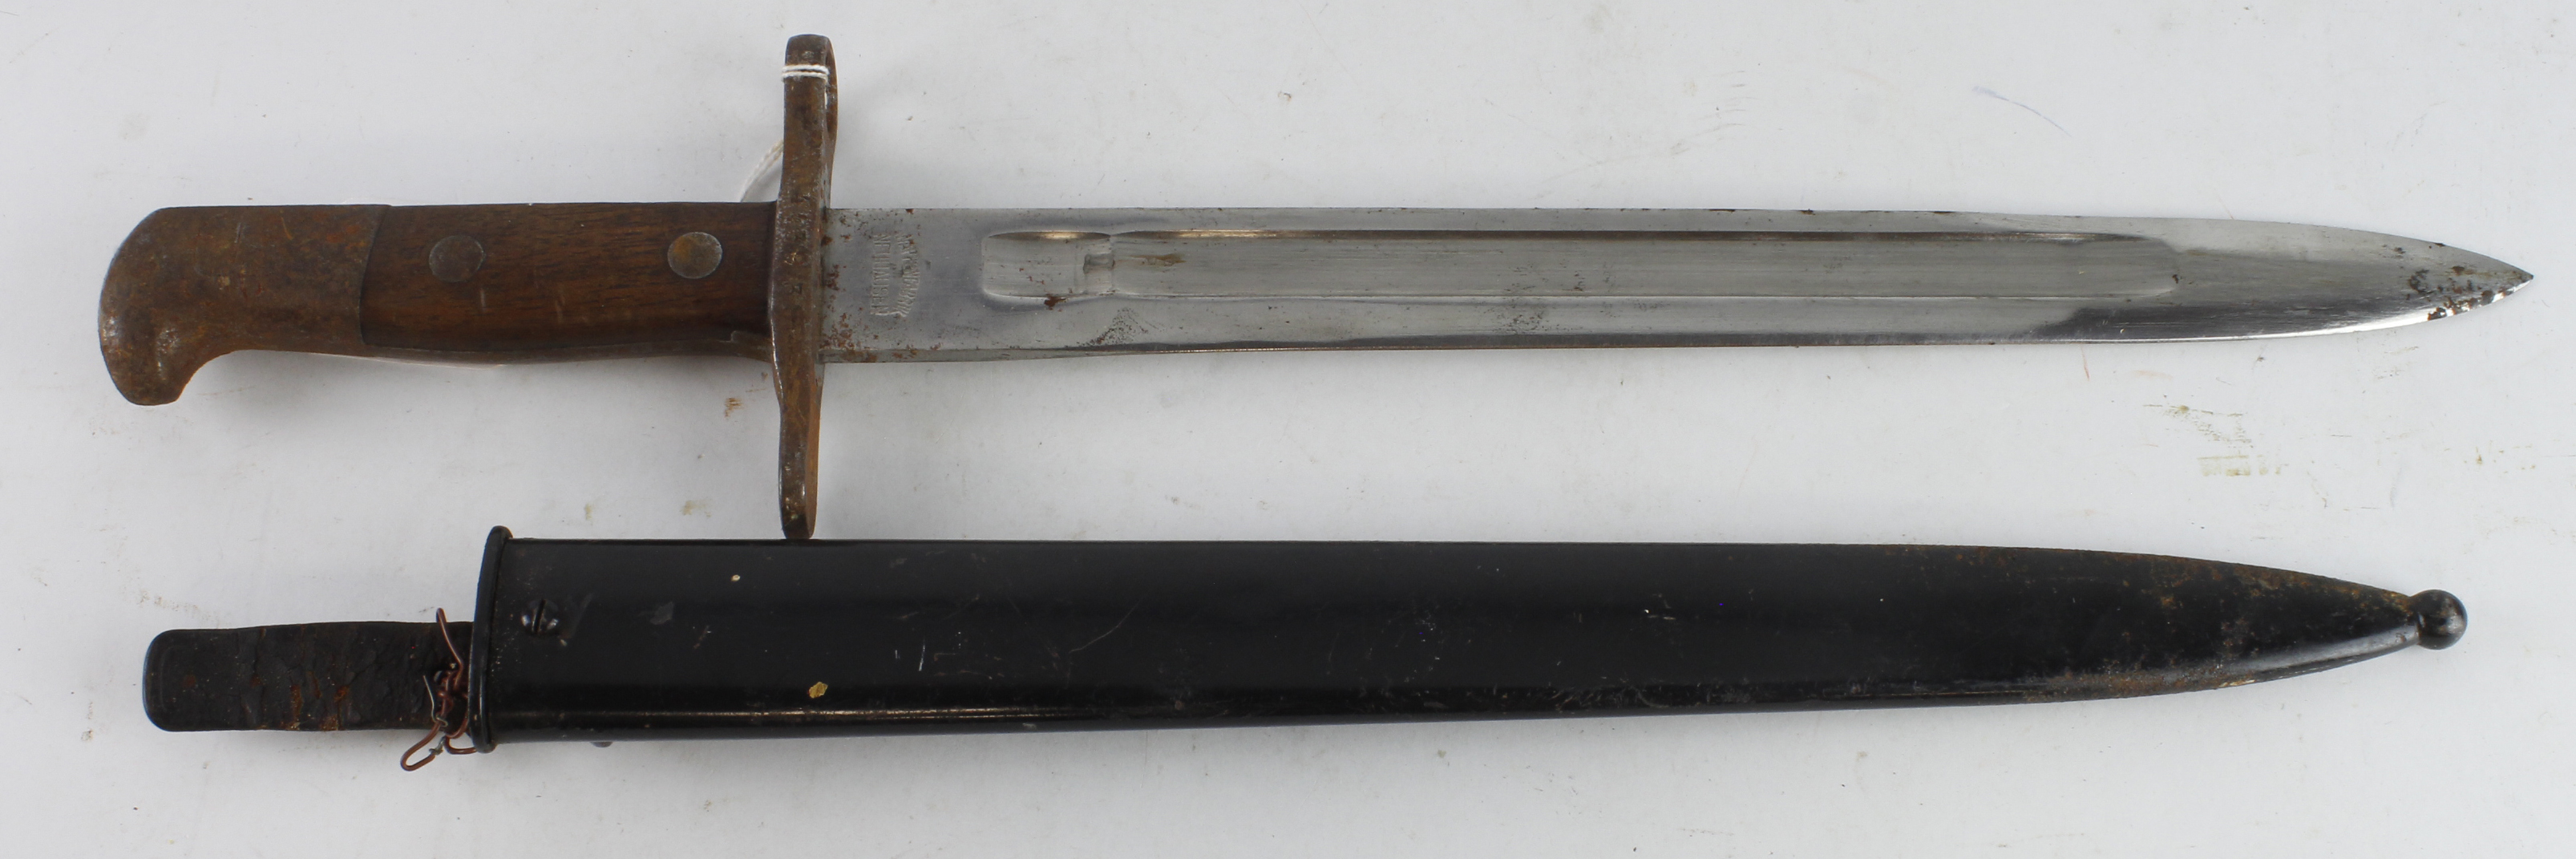 Swedish M1889 bayonet, good blade 11.5 inches, ricasso marked "Waffenfabrik Neohausen" in its